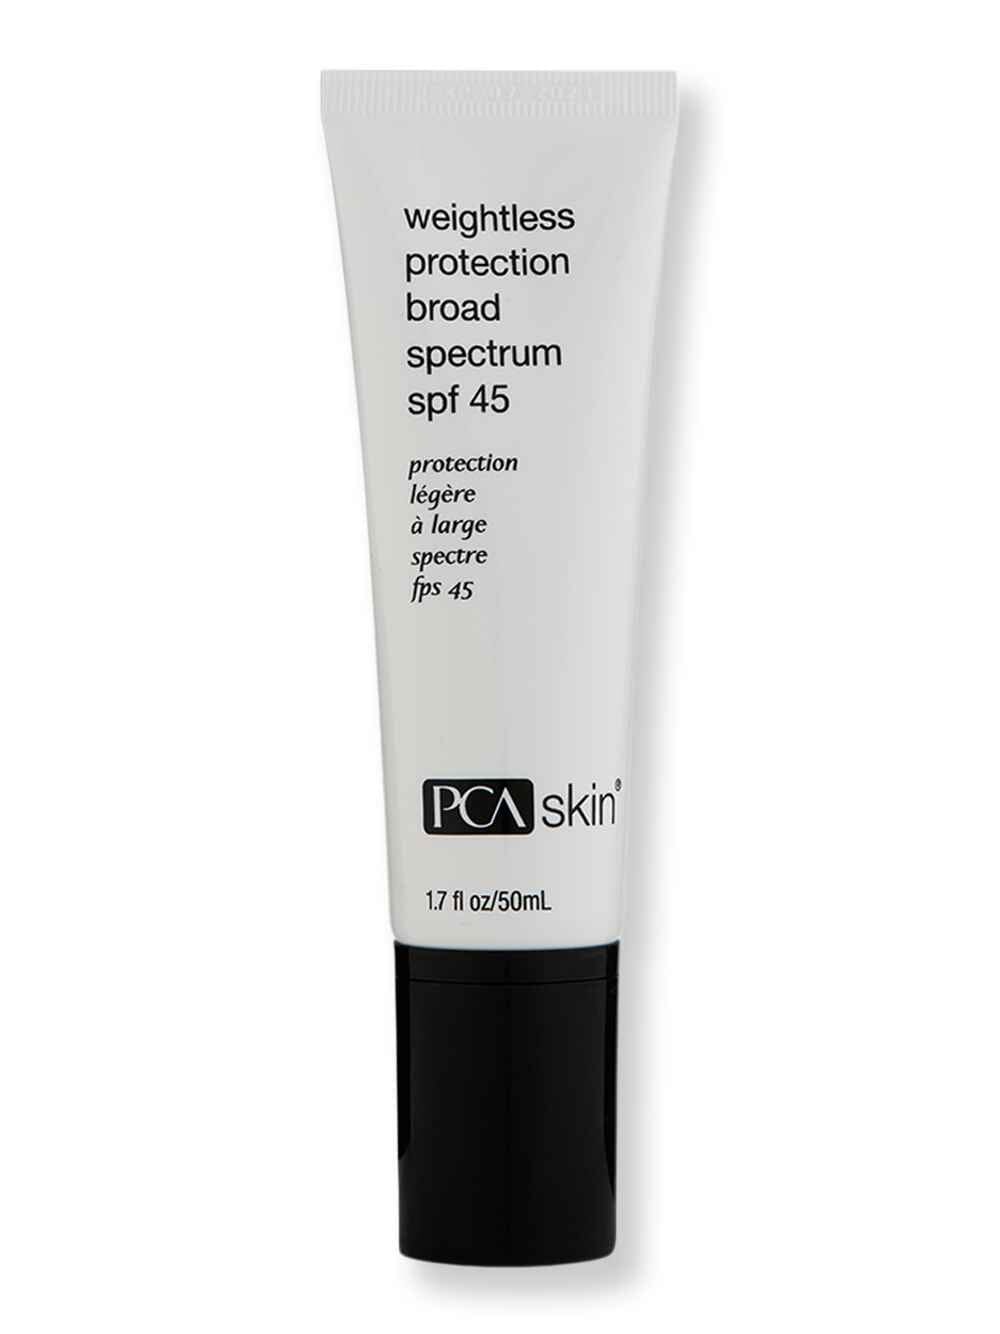 PCA Skin PCA Skin Weightless Protection Broad Spectrum SPF 45 1.7 oz50 ml Body Sunscreens 